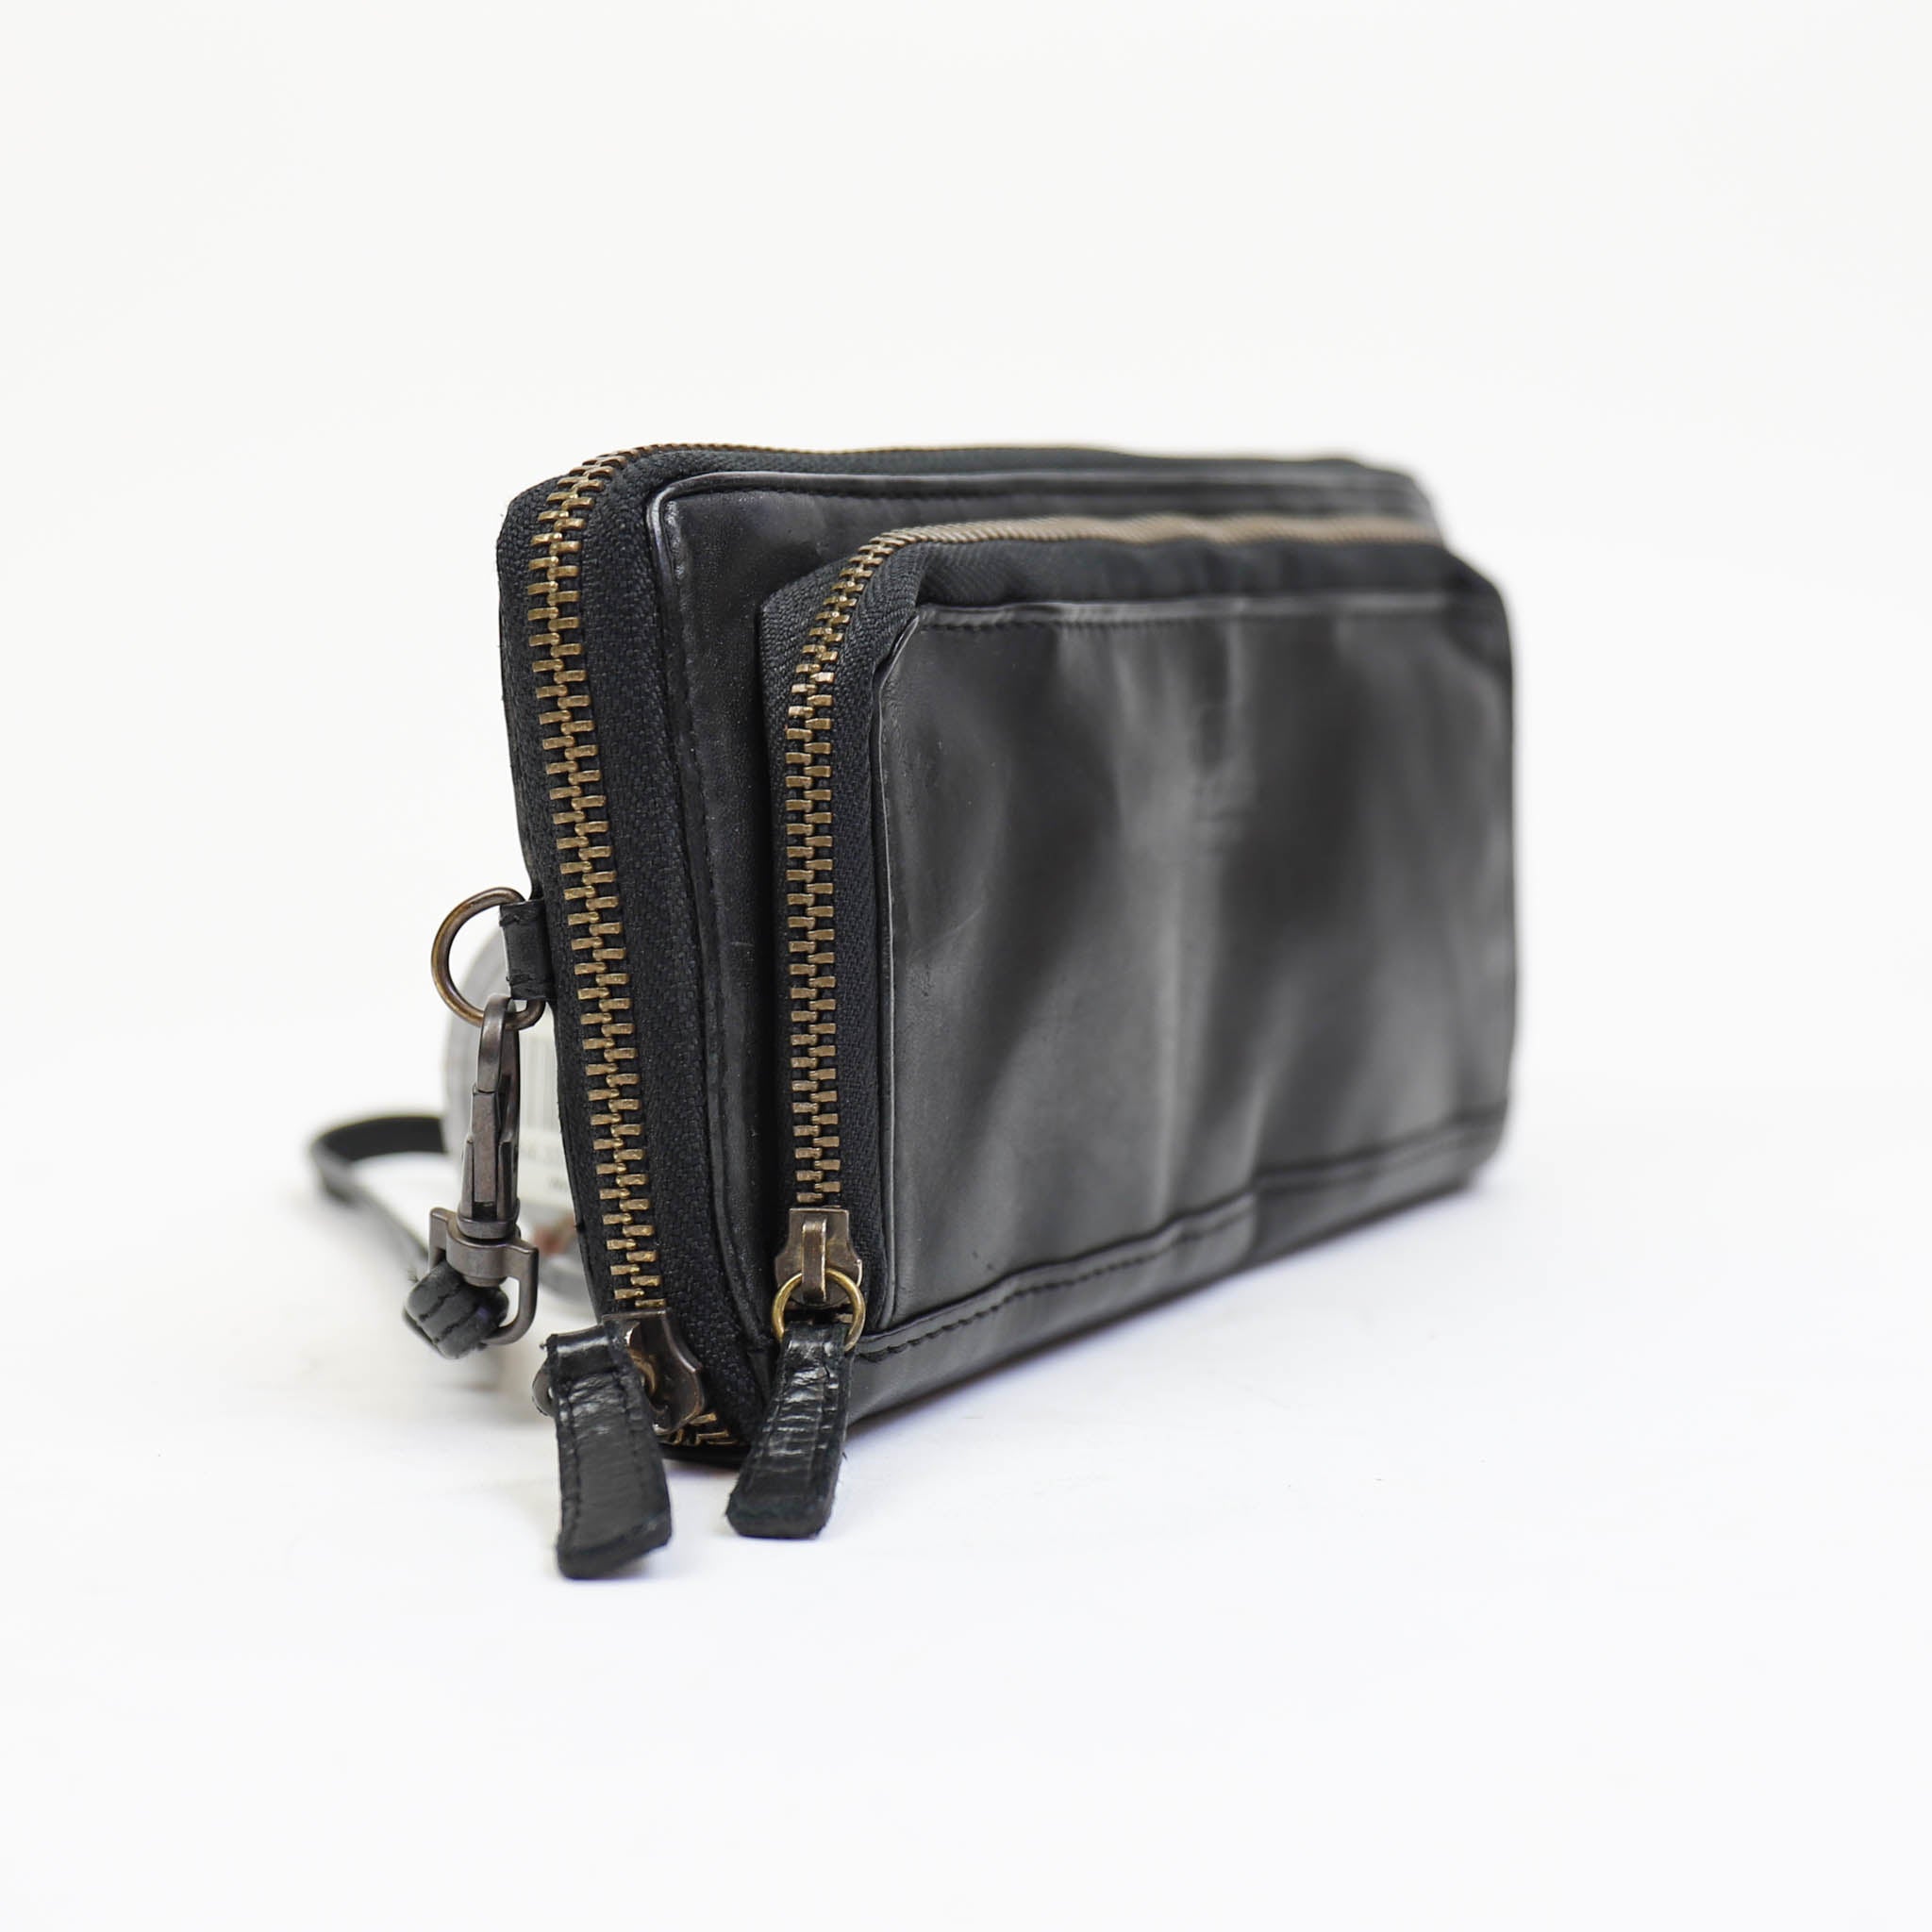 Zipper wallet 'Isa' black - CL 14851